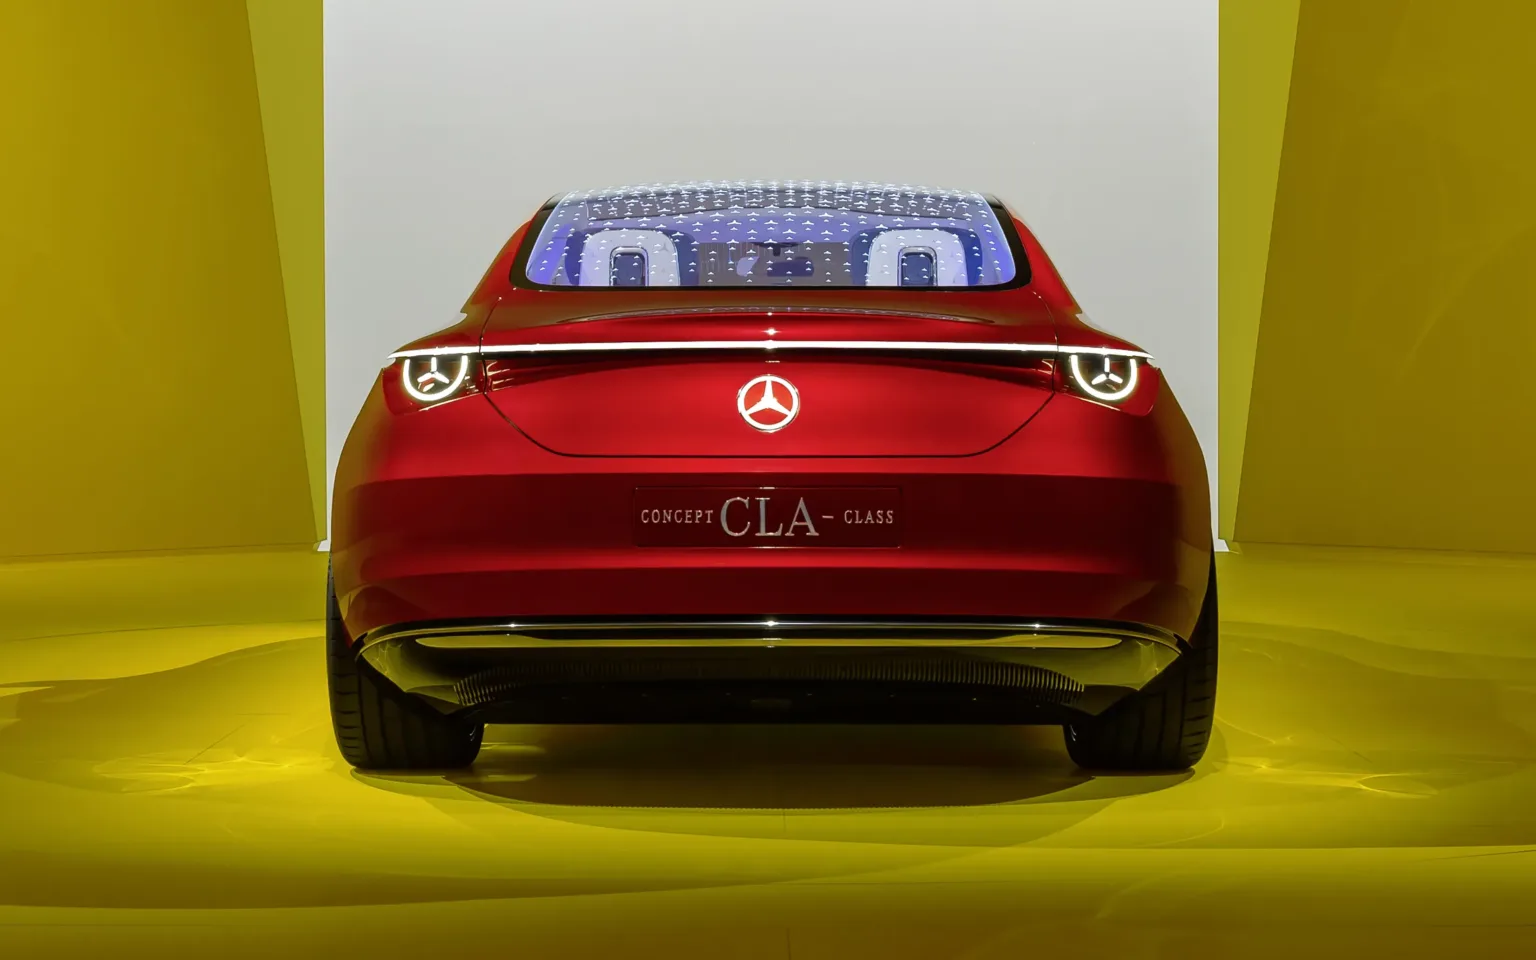 Mercedes-Benz Concept CLA Class Exterior Image 21